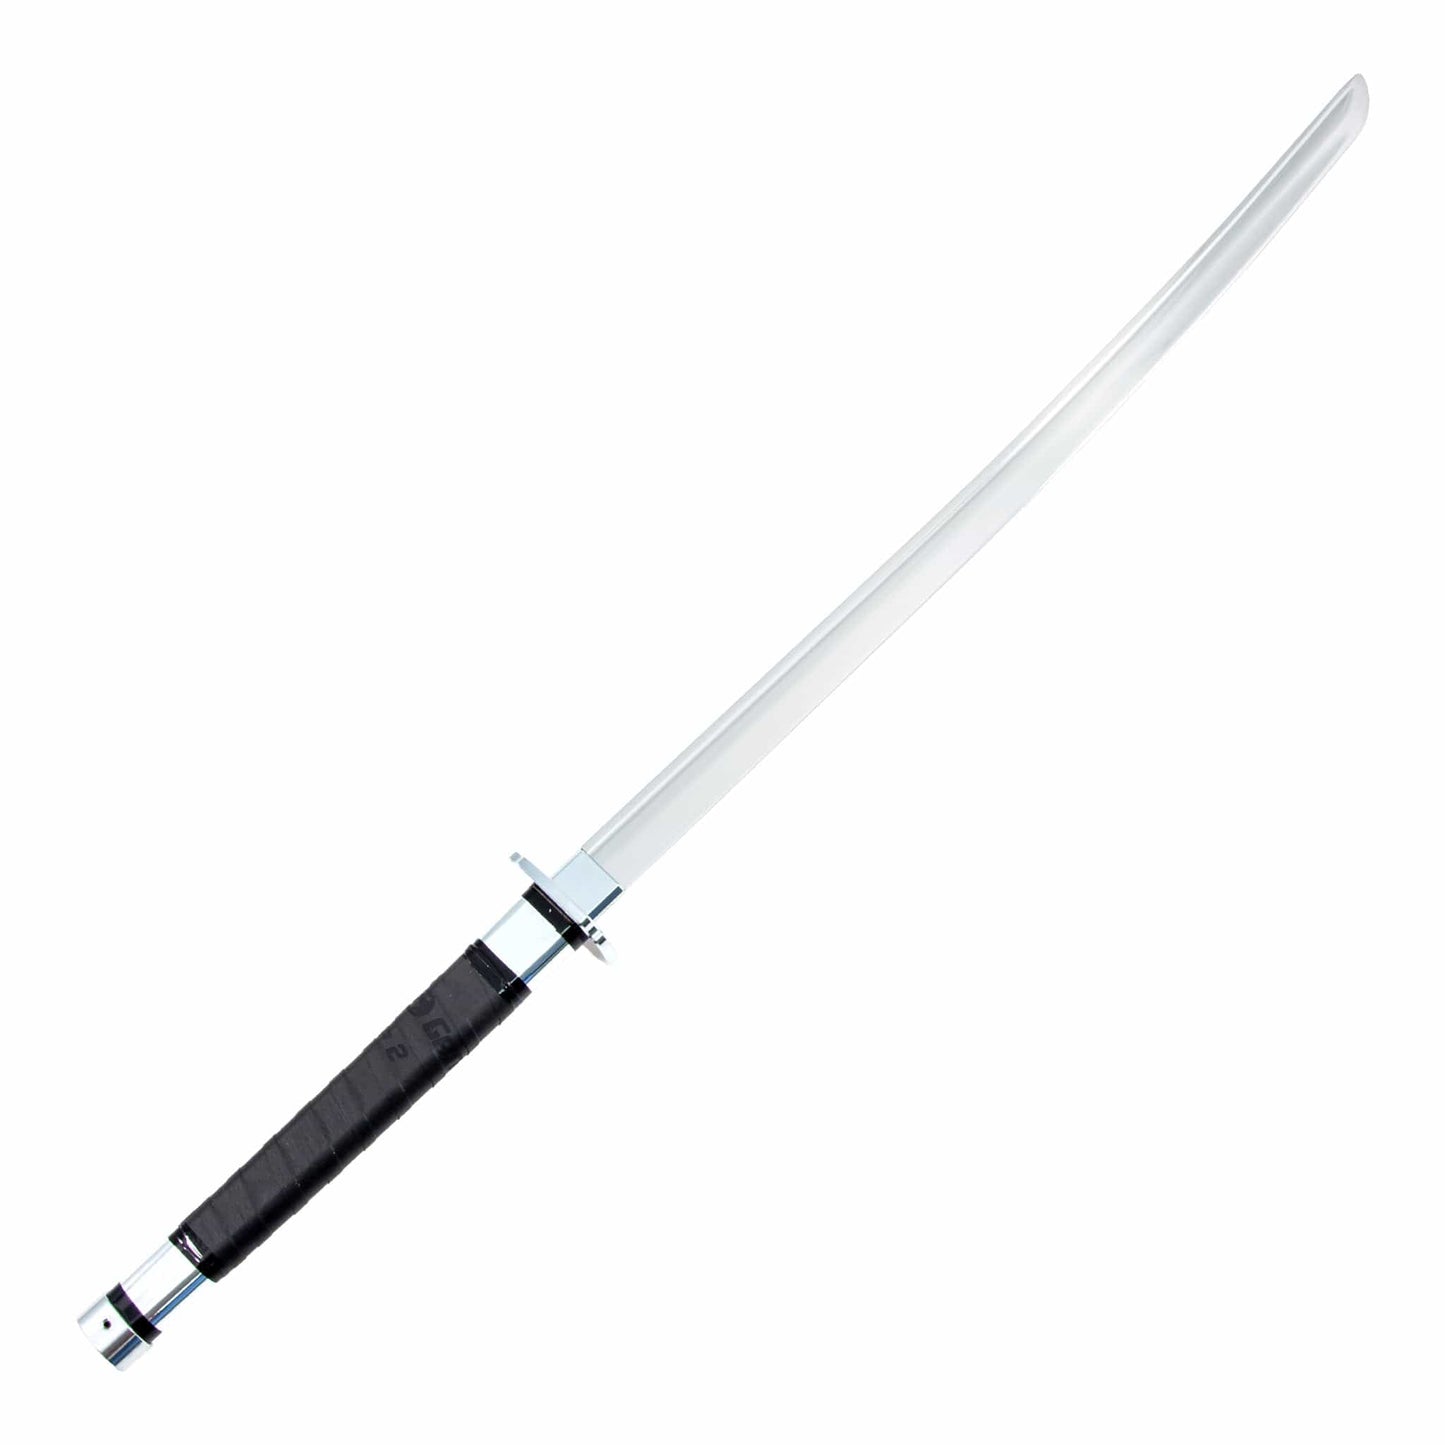 Eclipse Martial Art Supplies sporting goods black G-Force Demo Samurai Sword non-sharp Kata